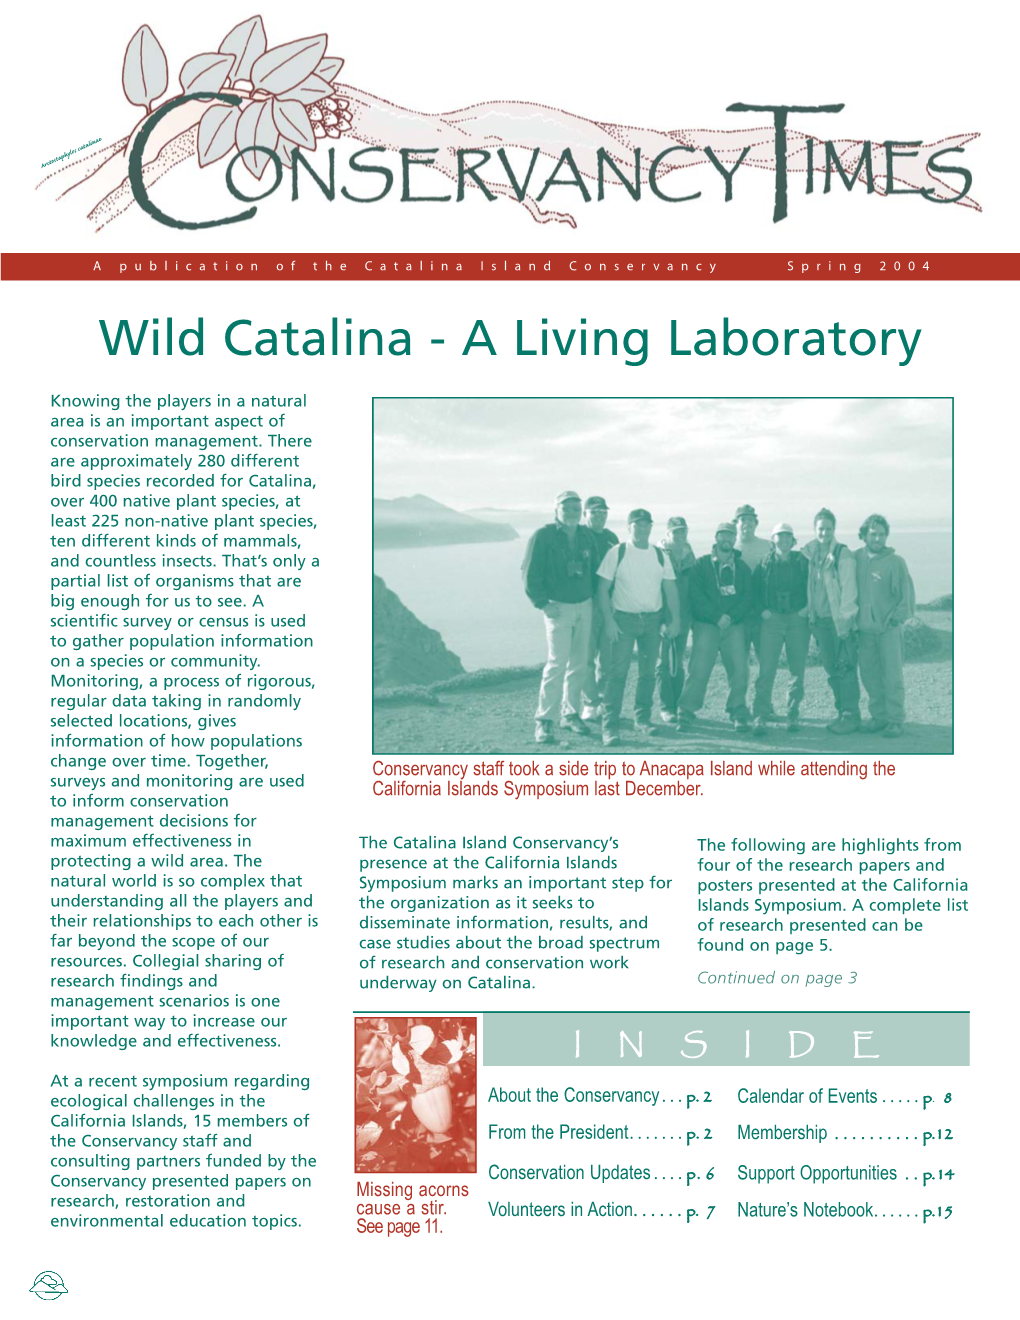 Wild Catalina - a Living Laboratory